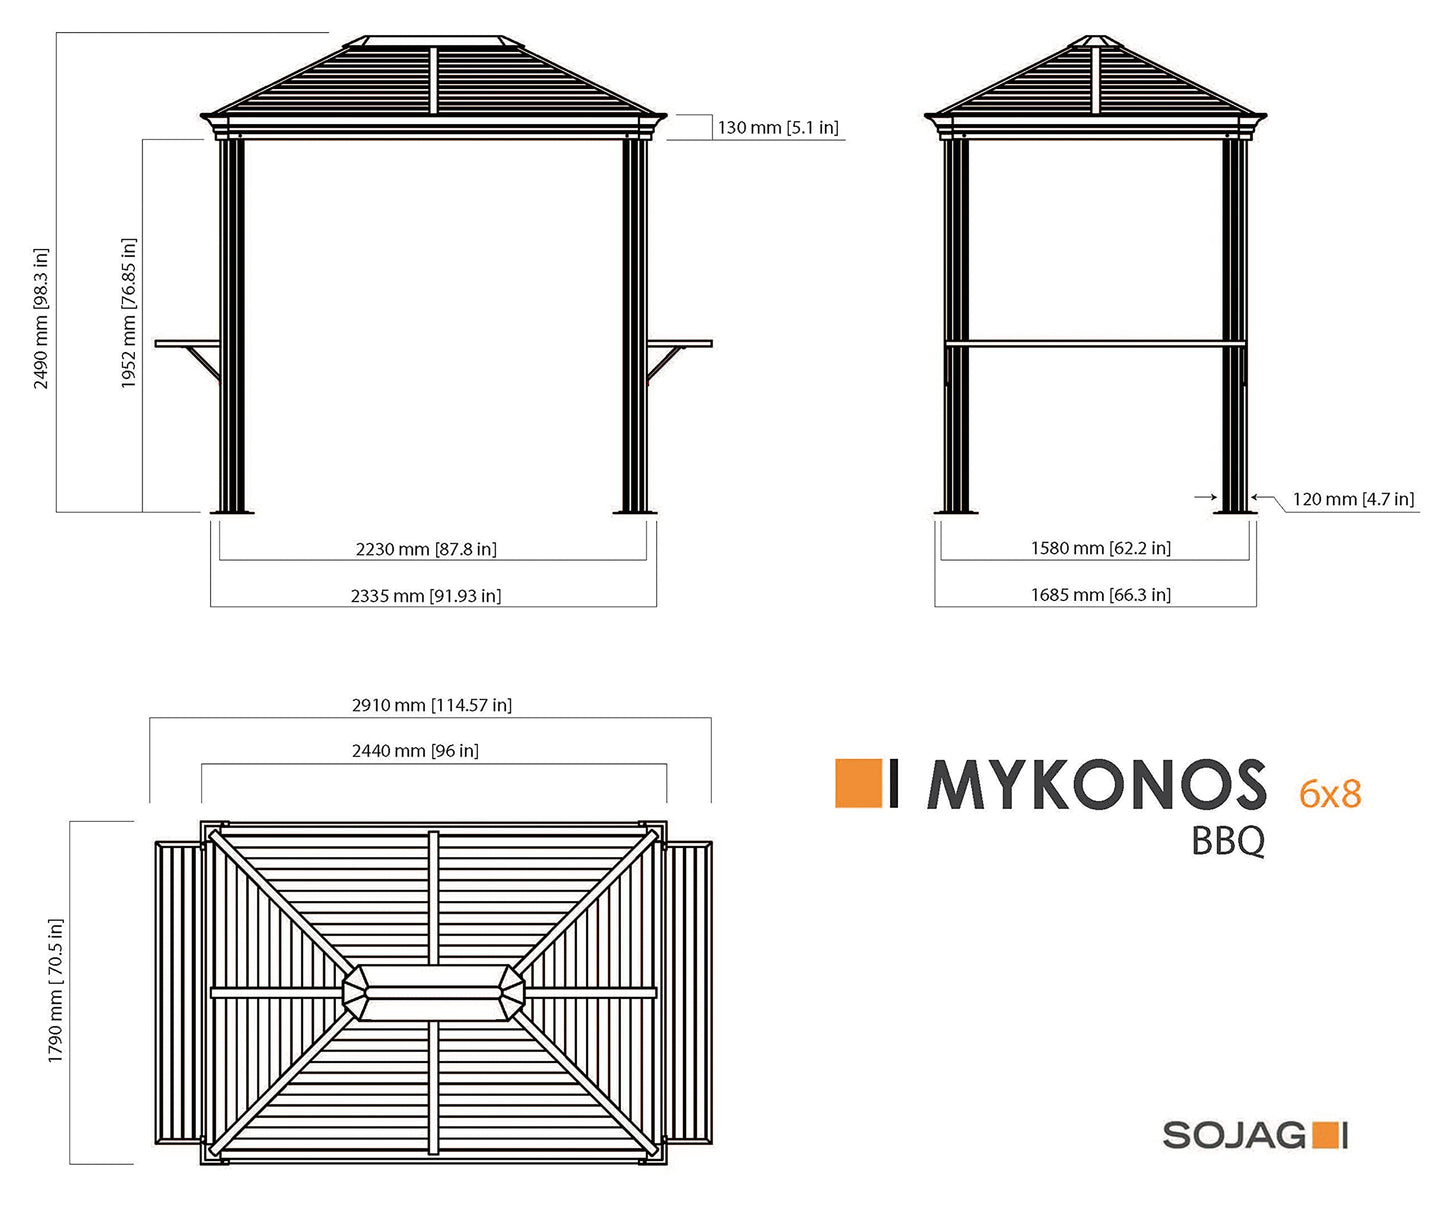 Sojag Mykonos 5x8ft BBQ Grill Gazebo, Aluminum Frame